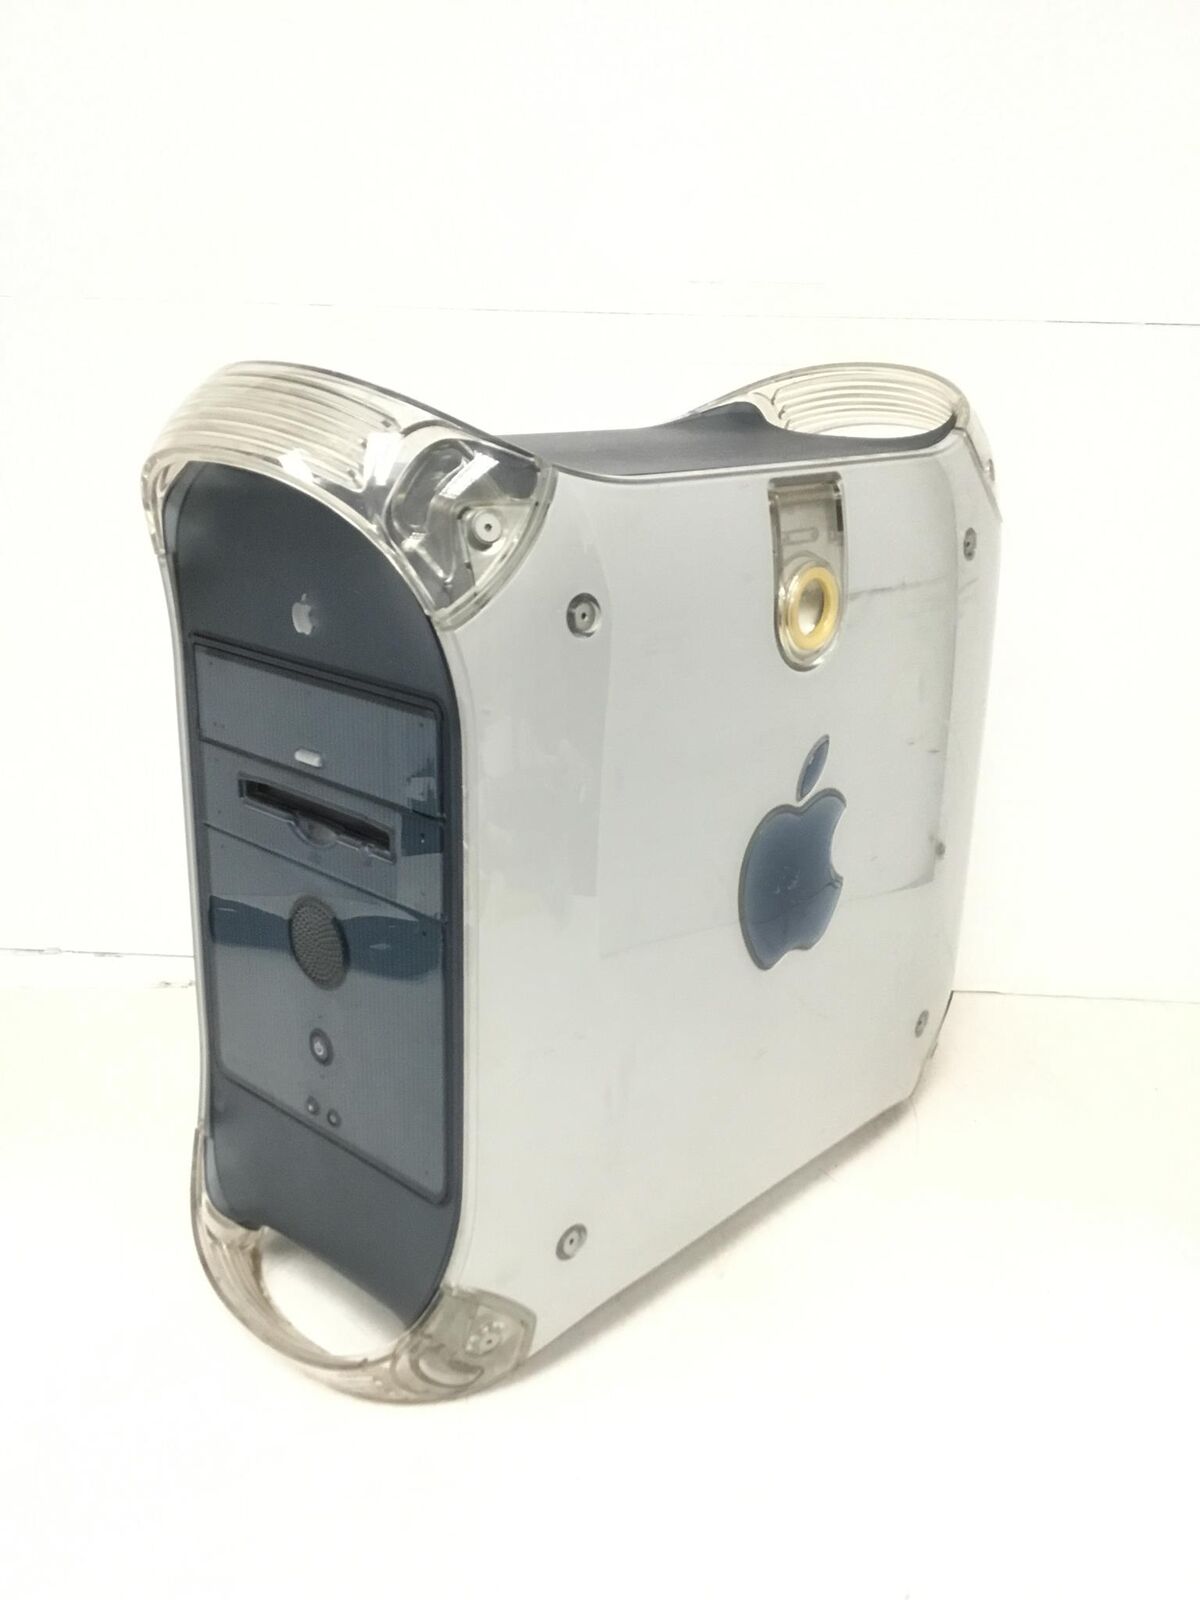 Apple Power Macintosh G4 Vintage Mac PowerPC 7400 500Mhz w/256MB RAM NO HDD/OS